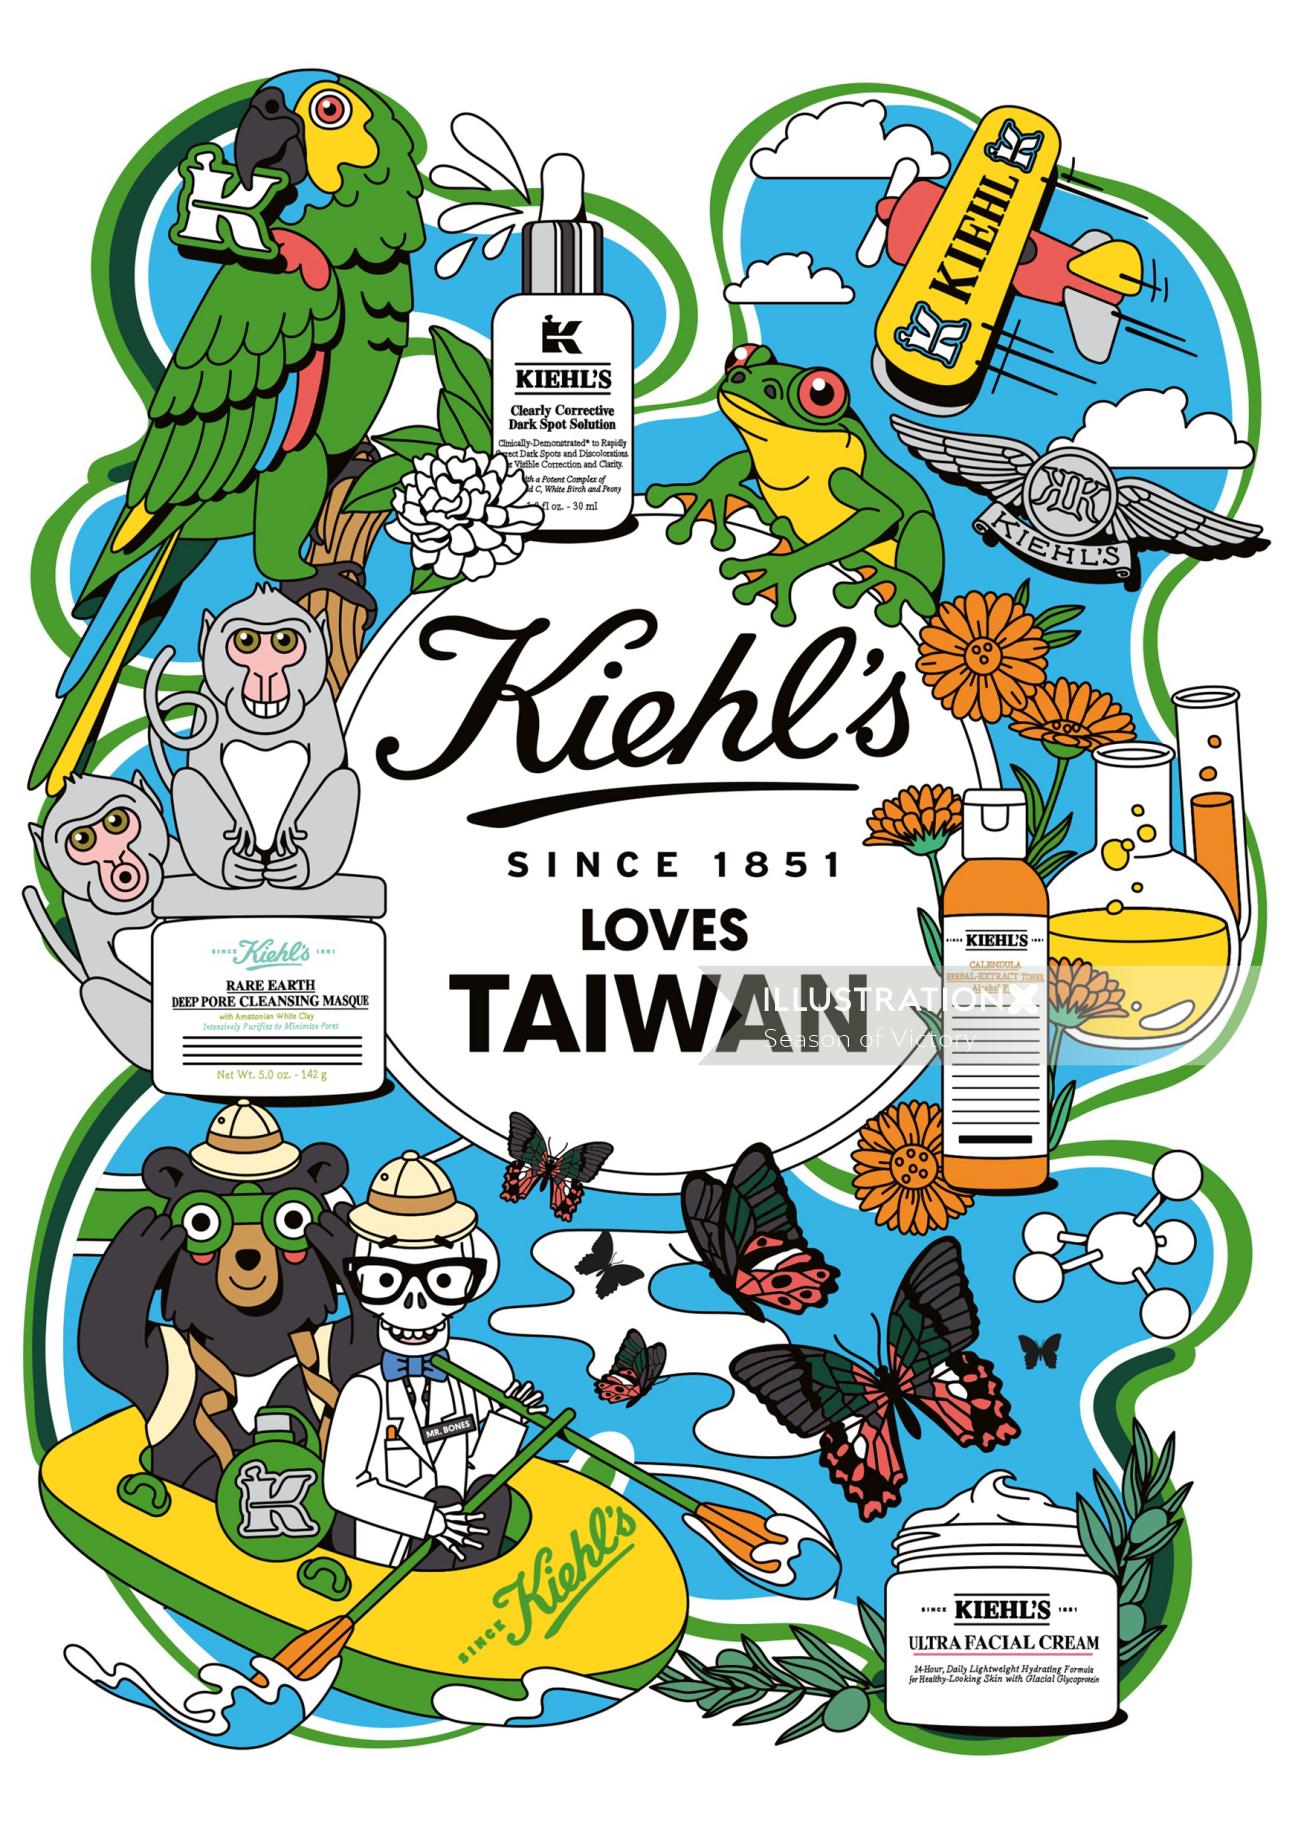 Kiehl's loves Taiwan poster art